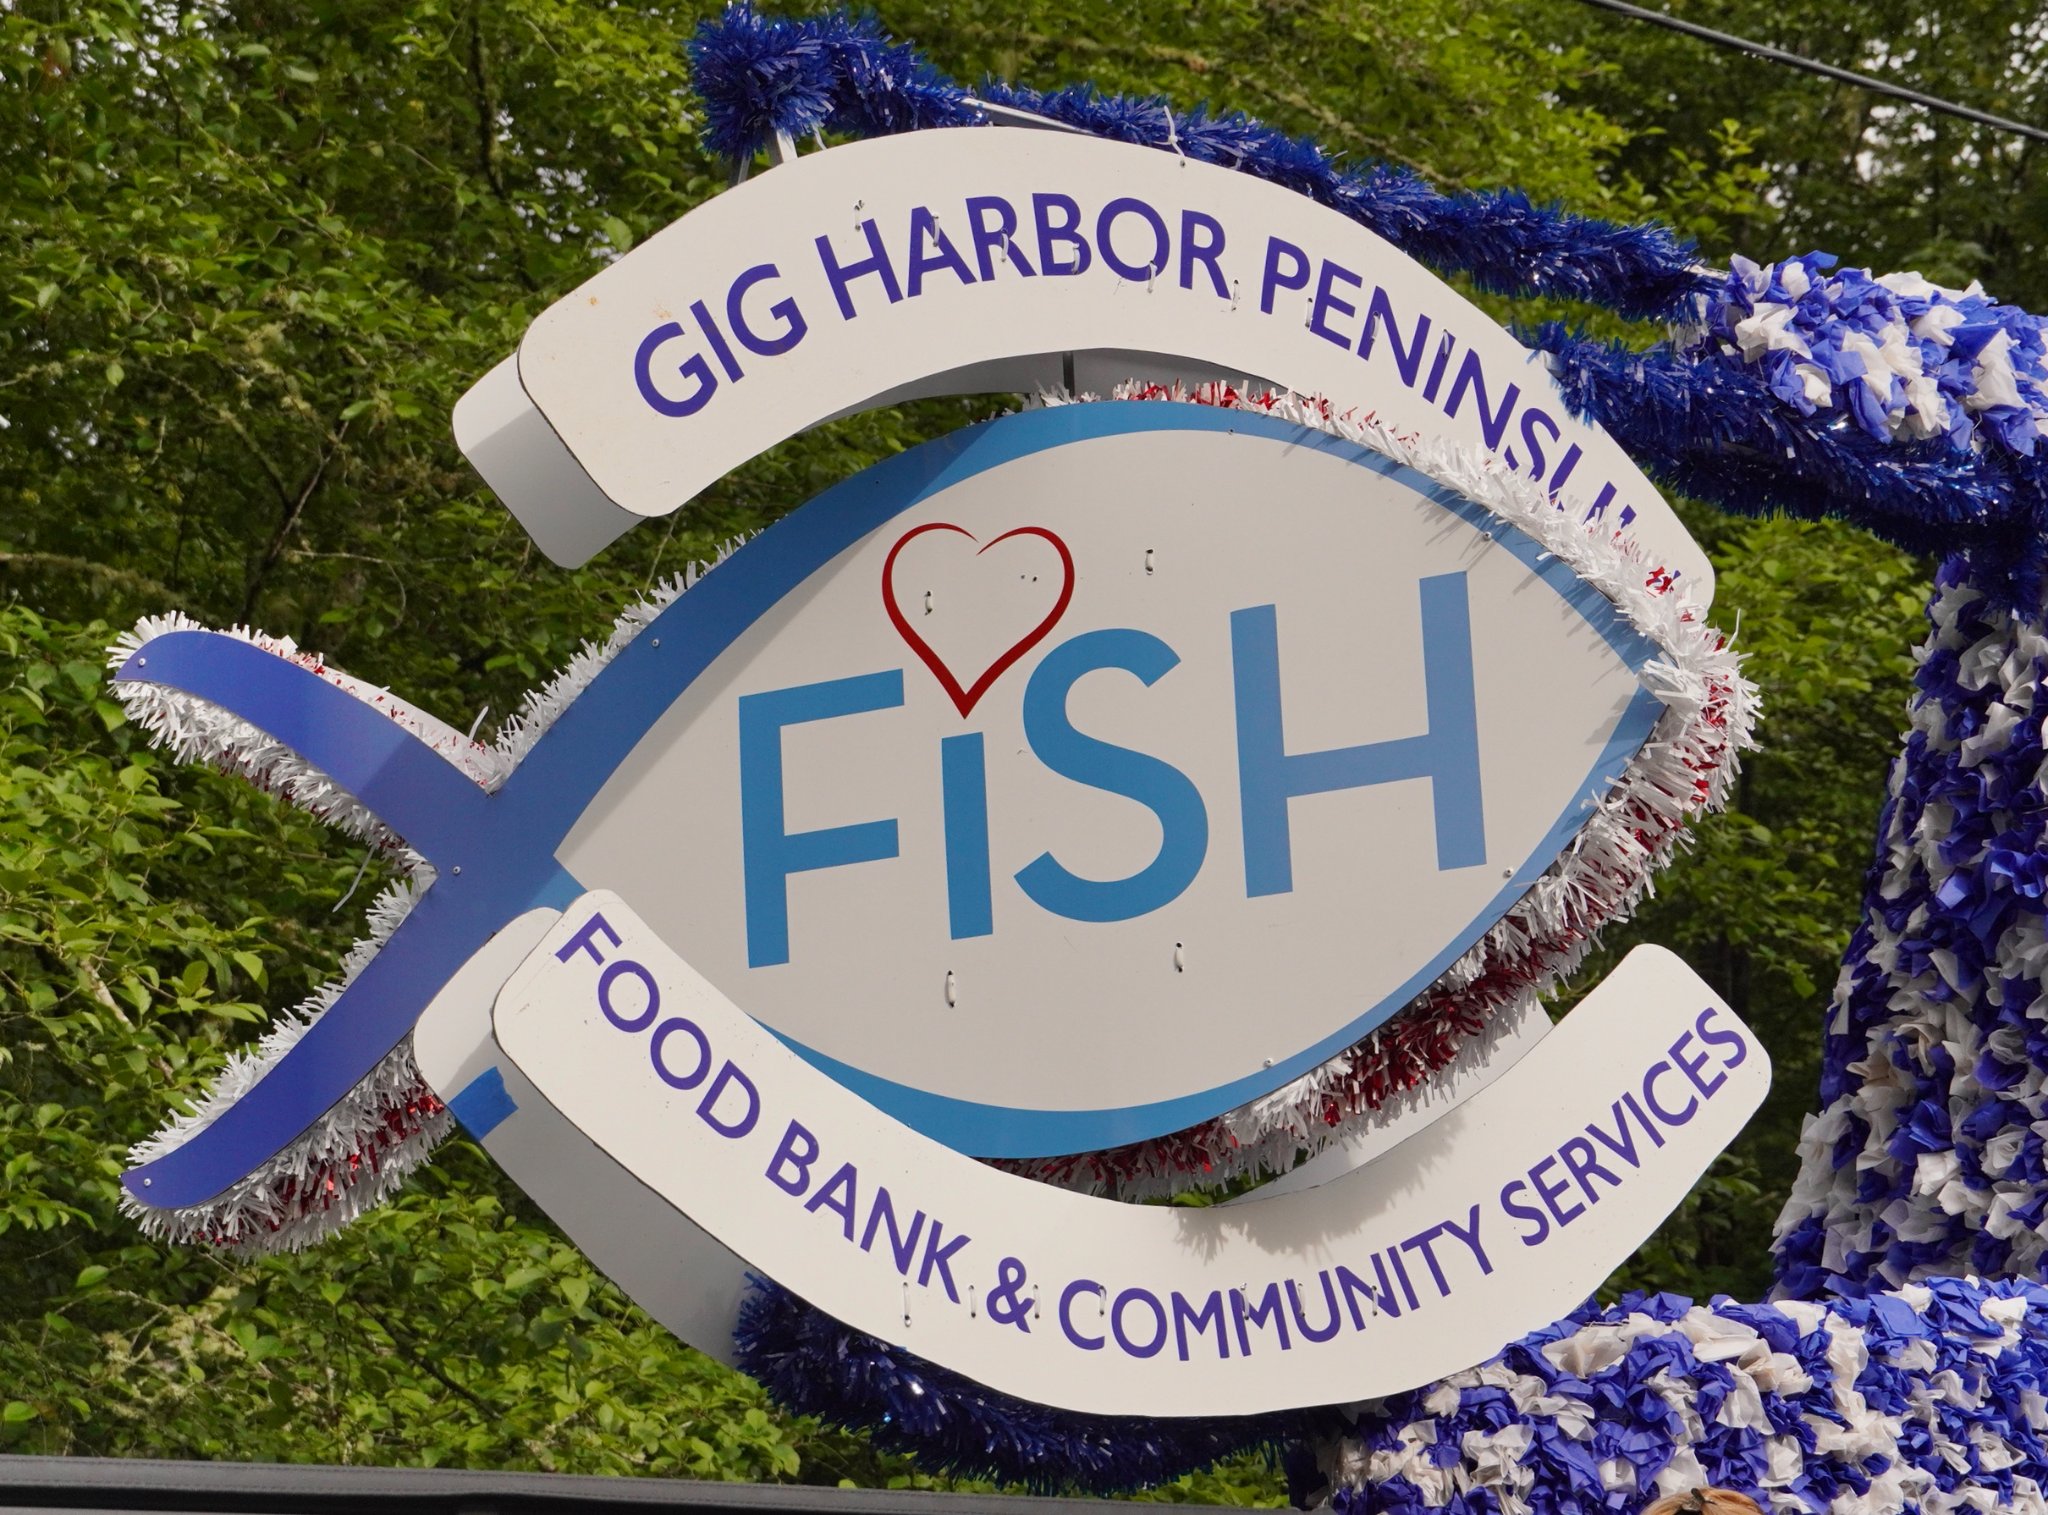 Gig Harbor Peninsula Fish Food Pantry